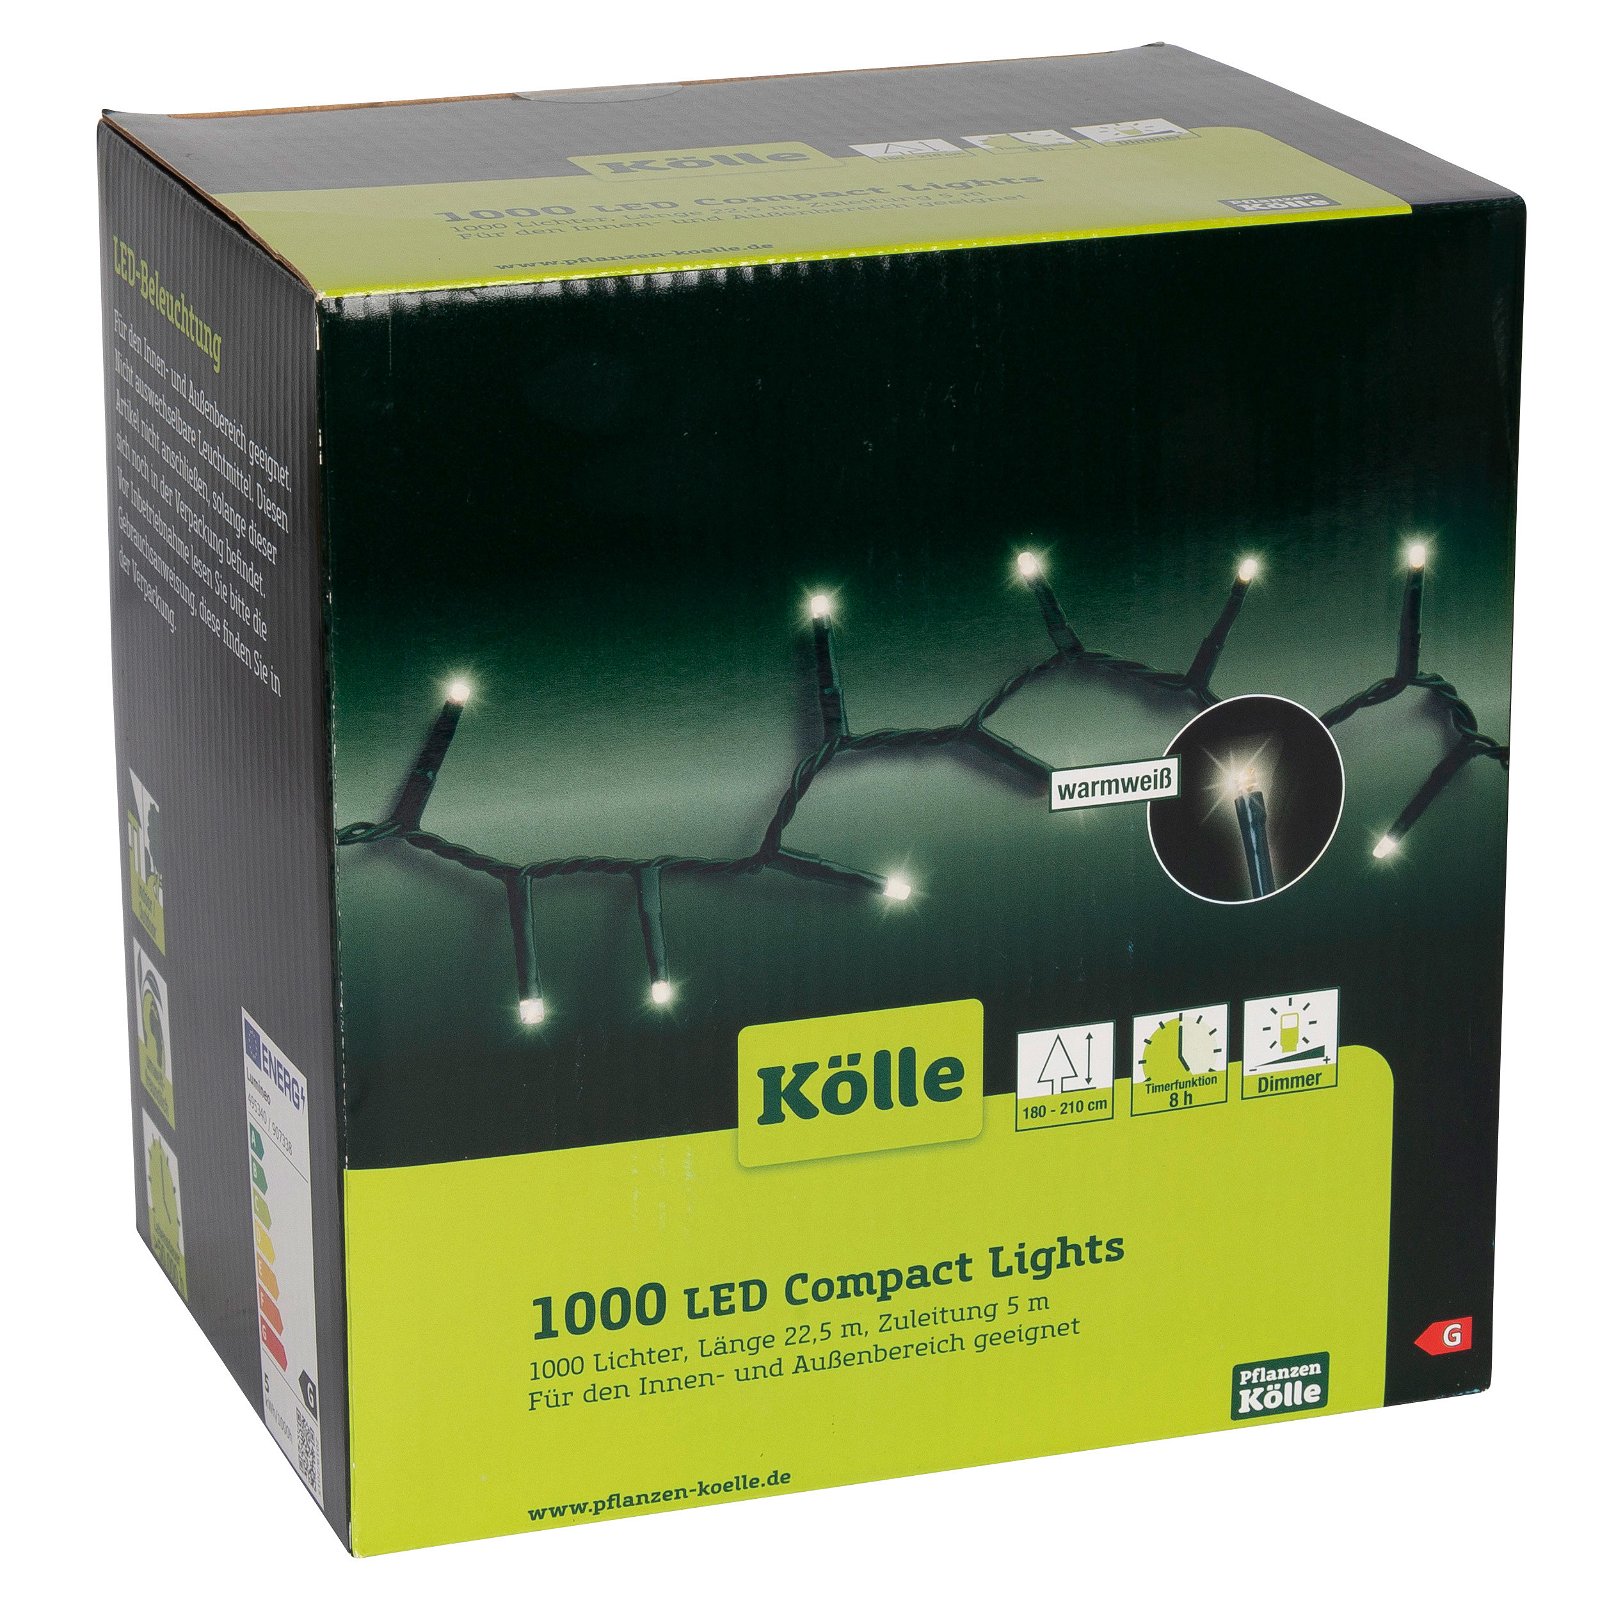 LED Lichterkette Compact Lights 1000 Lichter, Timer & Dimmer, 22,5 m, warmweiß